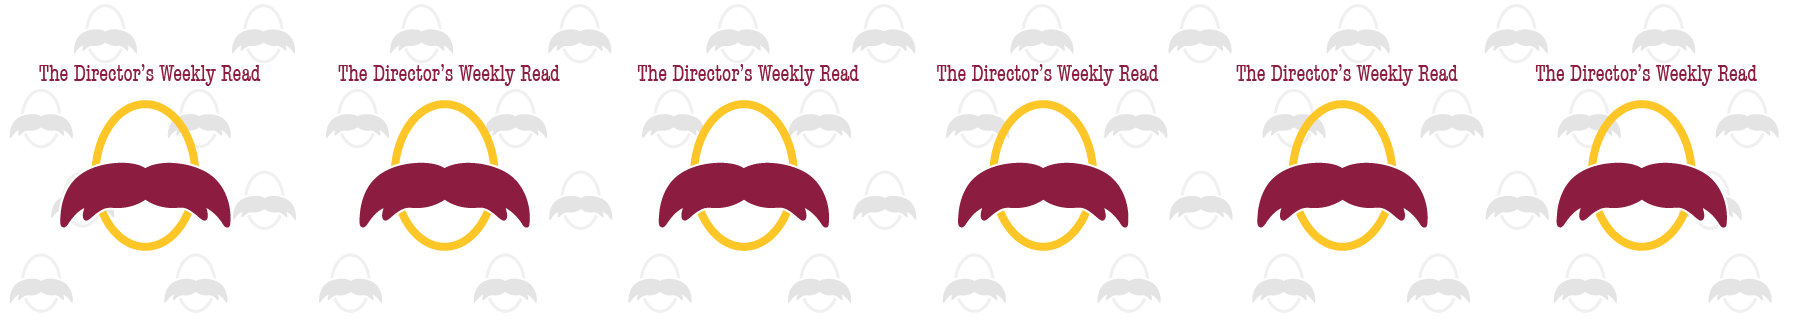 directors_weekly_read_hero